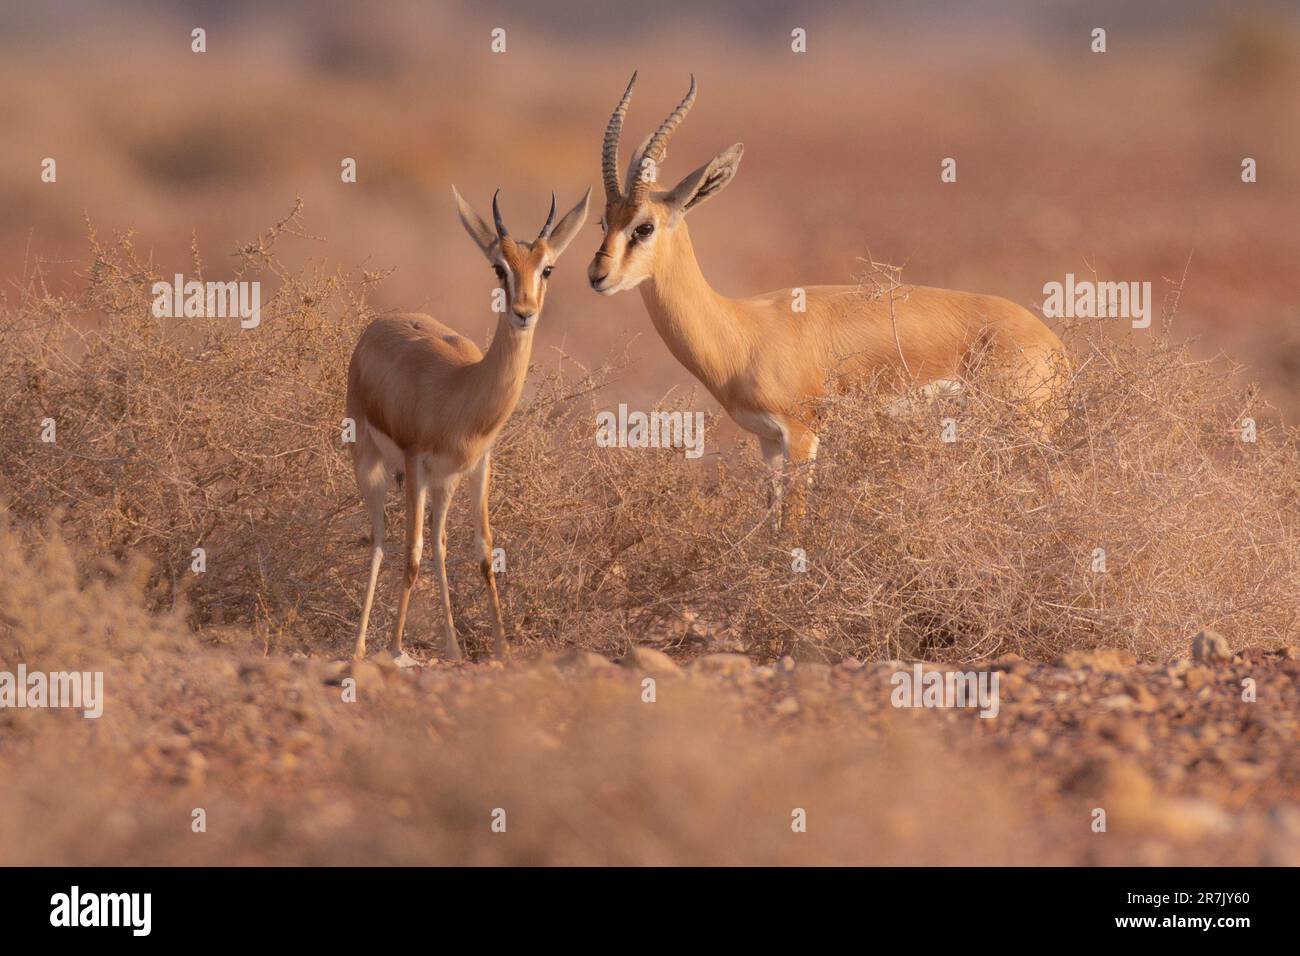 Dorcas Gazelle (Gazella dorcas), auch bekannt als Ariel Gazelle und غزال دوركاس, wurde im Januar in Israel fotografiert Stockfoto